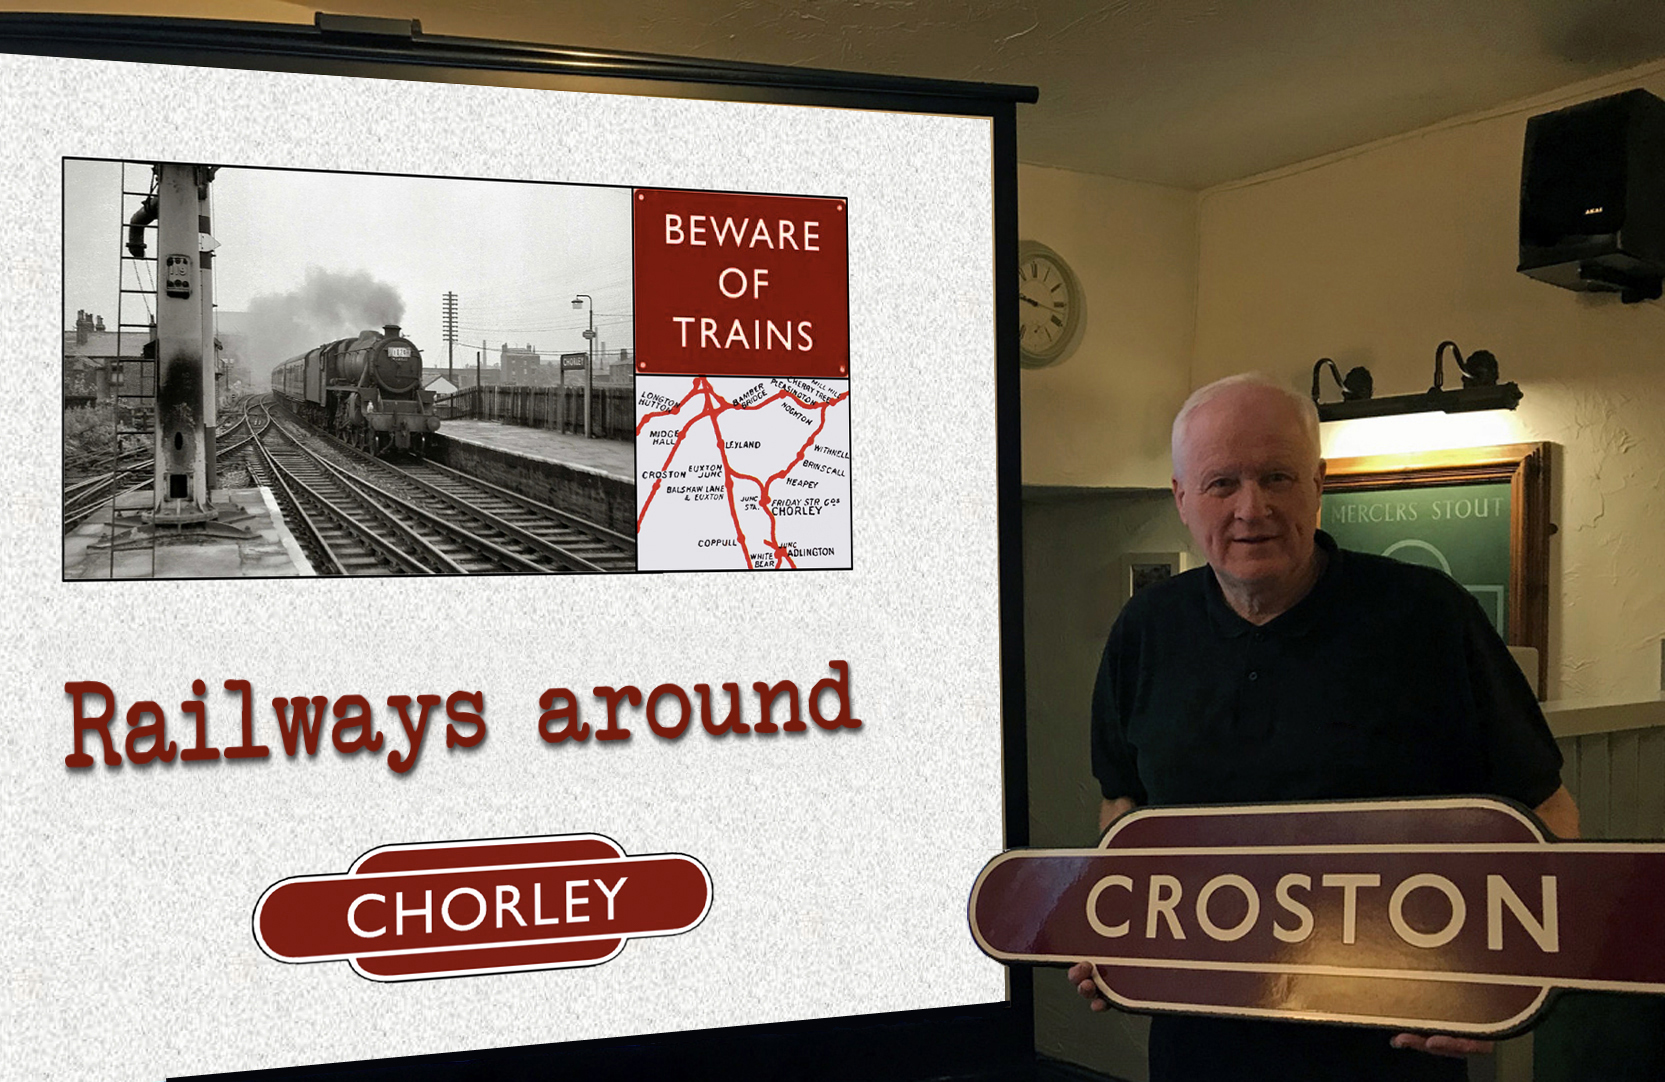 Steve presenting his railway talk